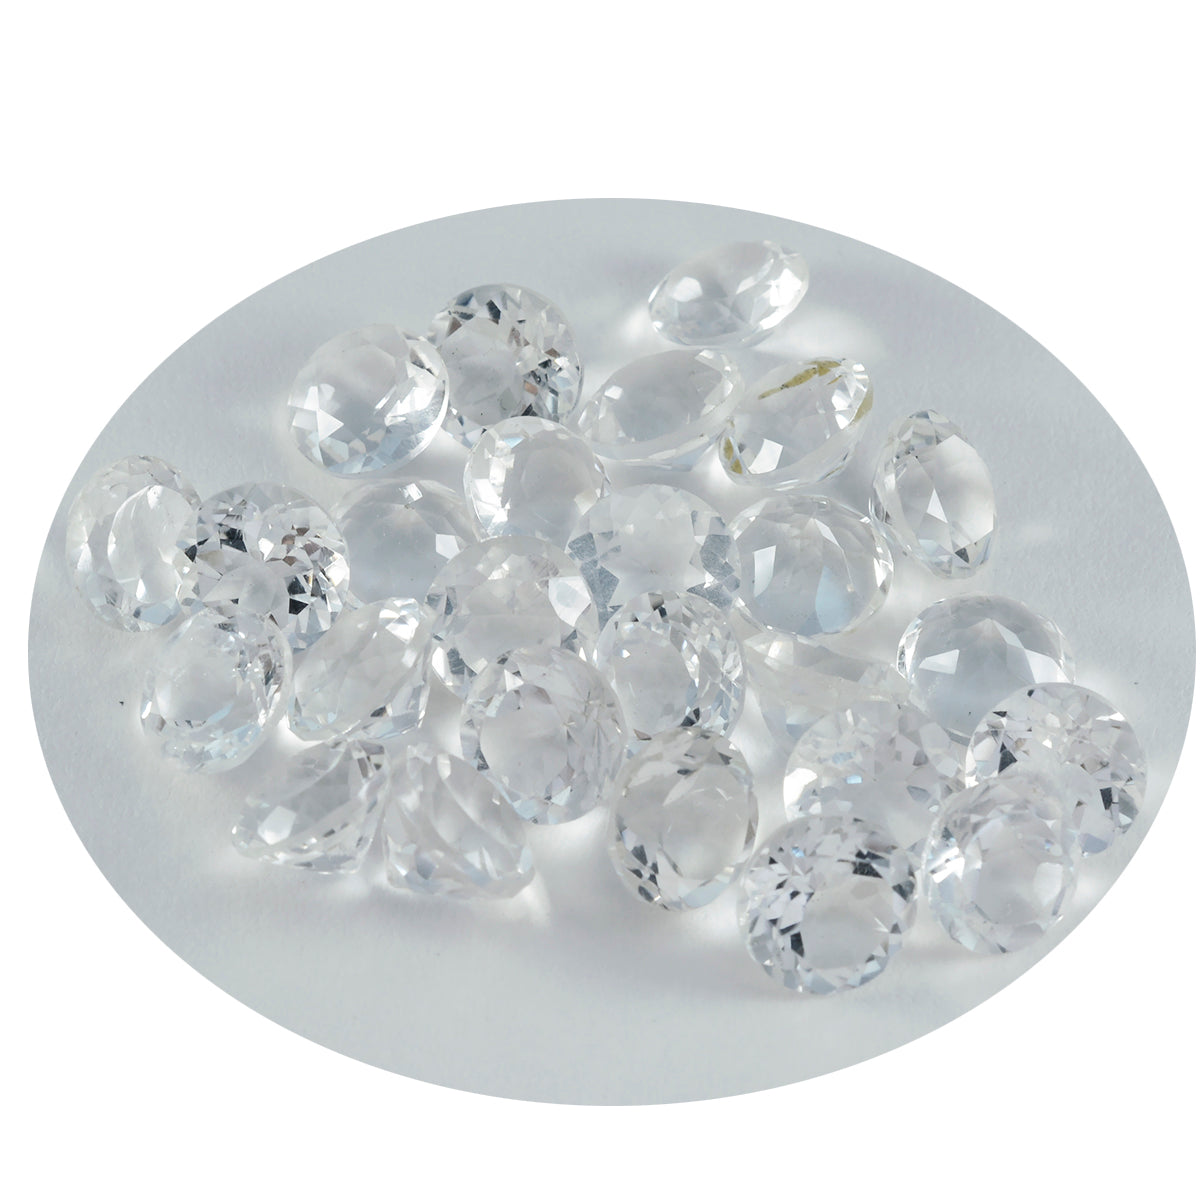 Riyogems 1PC wit kristalkwarts gefacetteerd 5x5 mm ronde vorm verbazingwekkende kwaliteit edelstenen